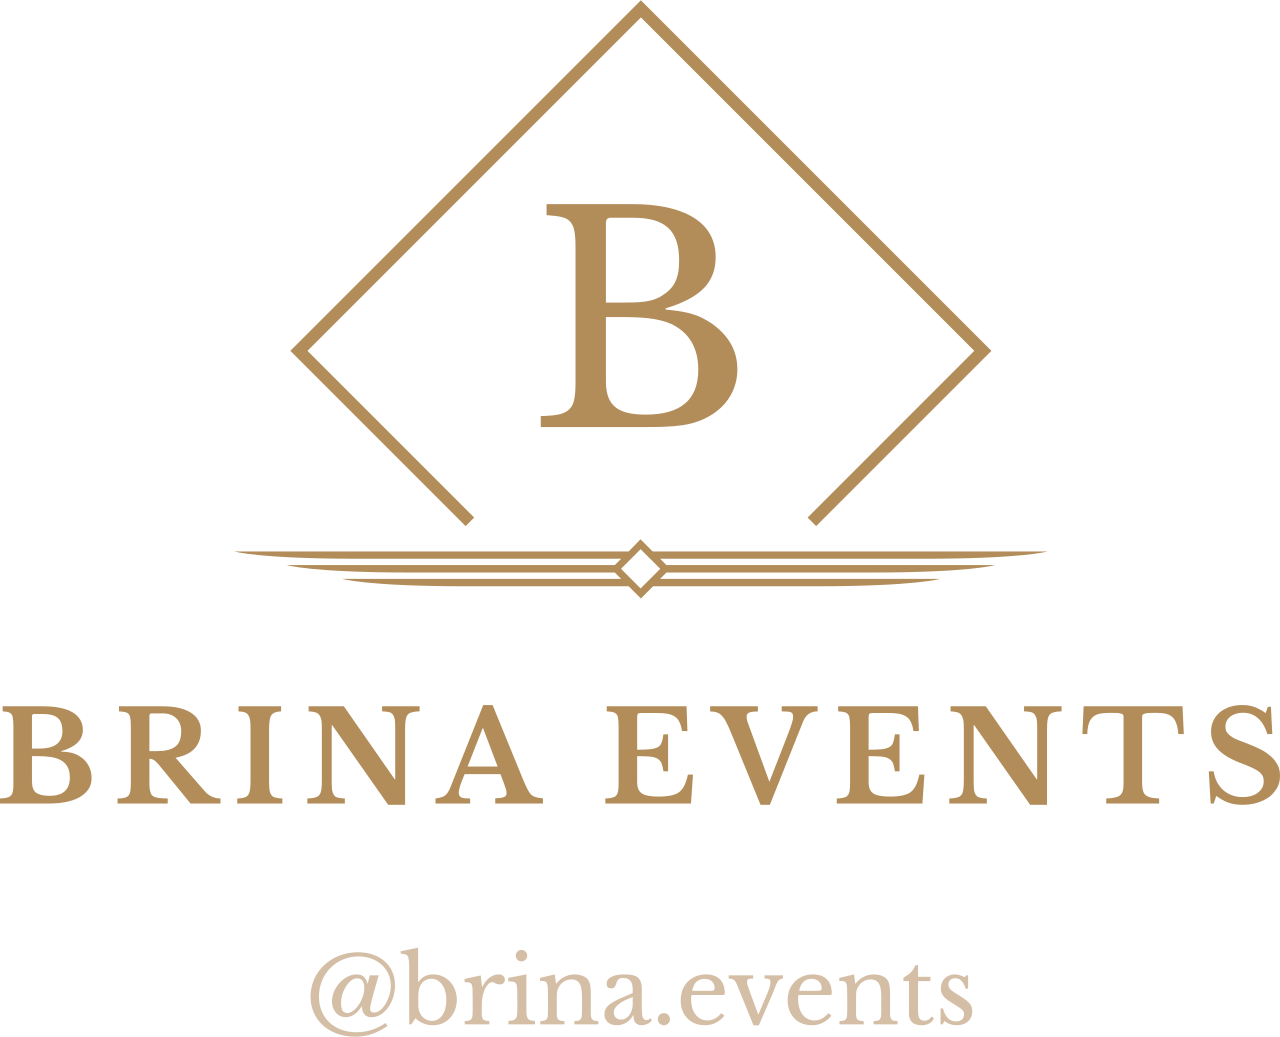 BRINA EVENTS's web page